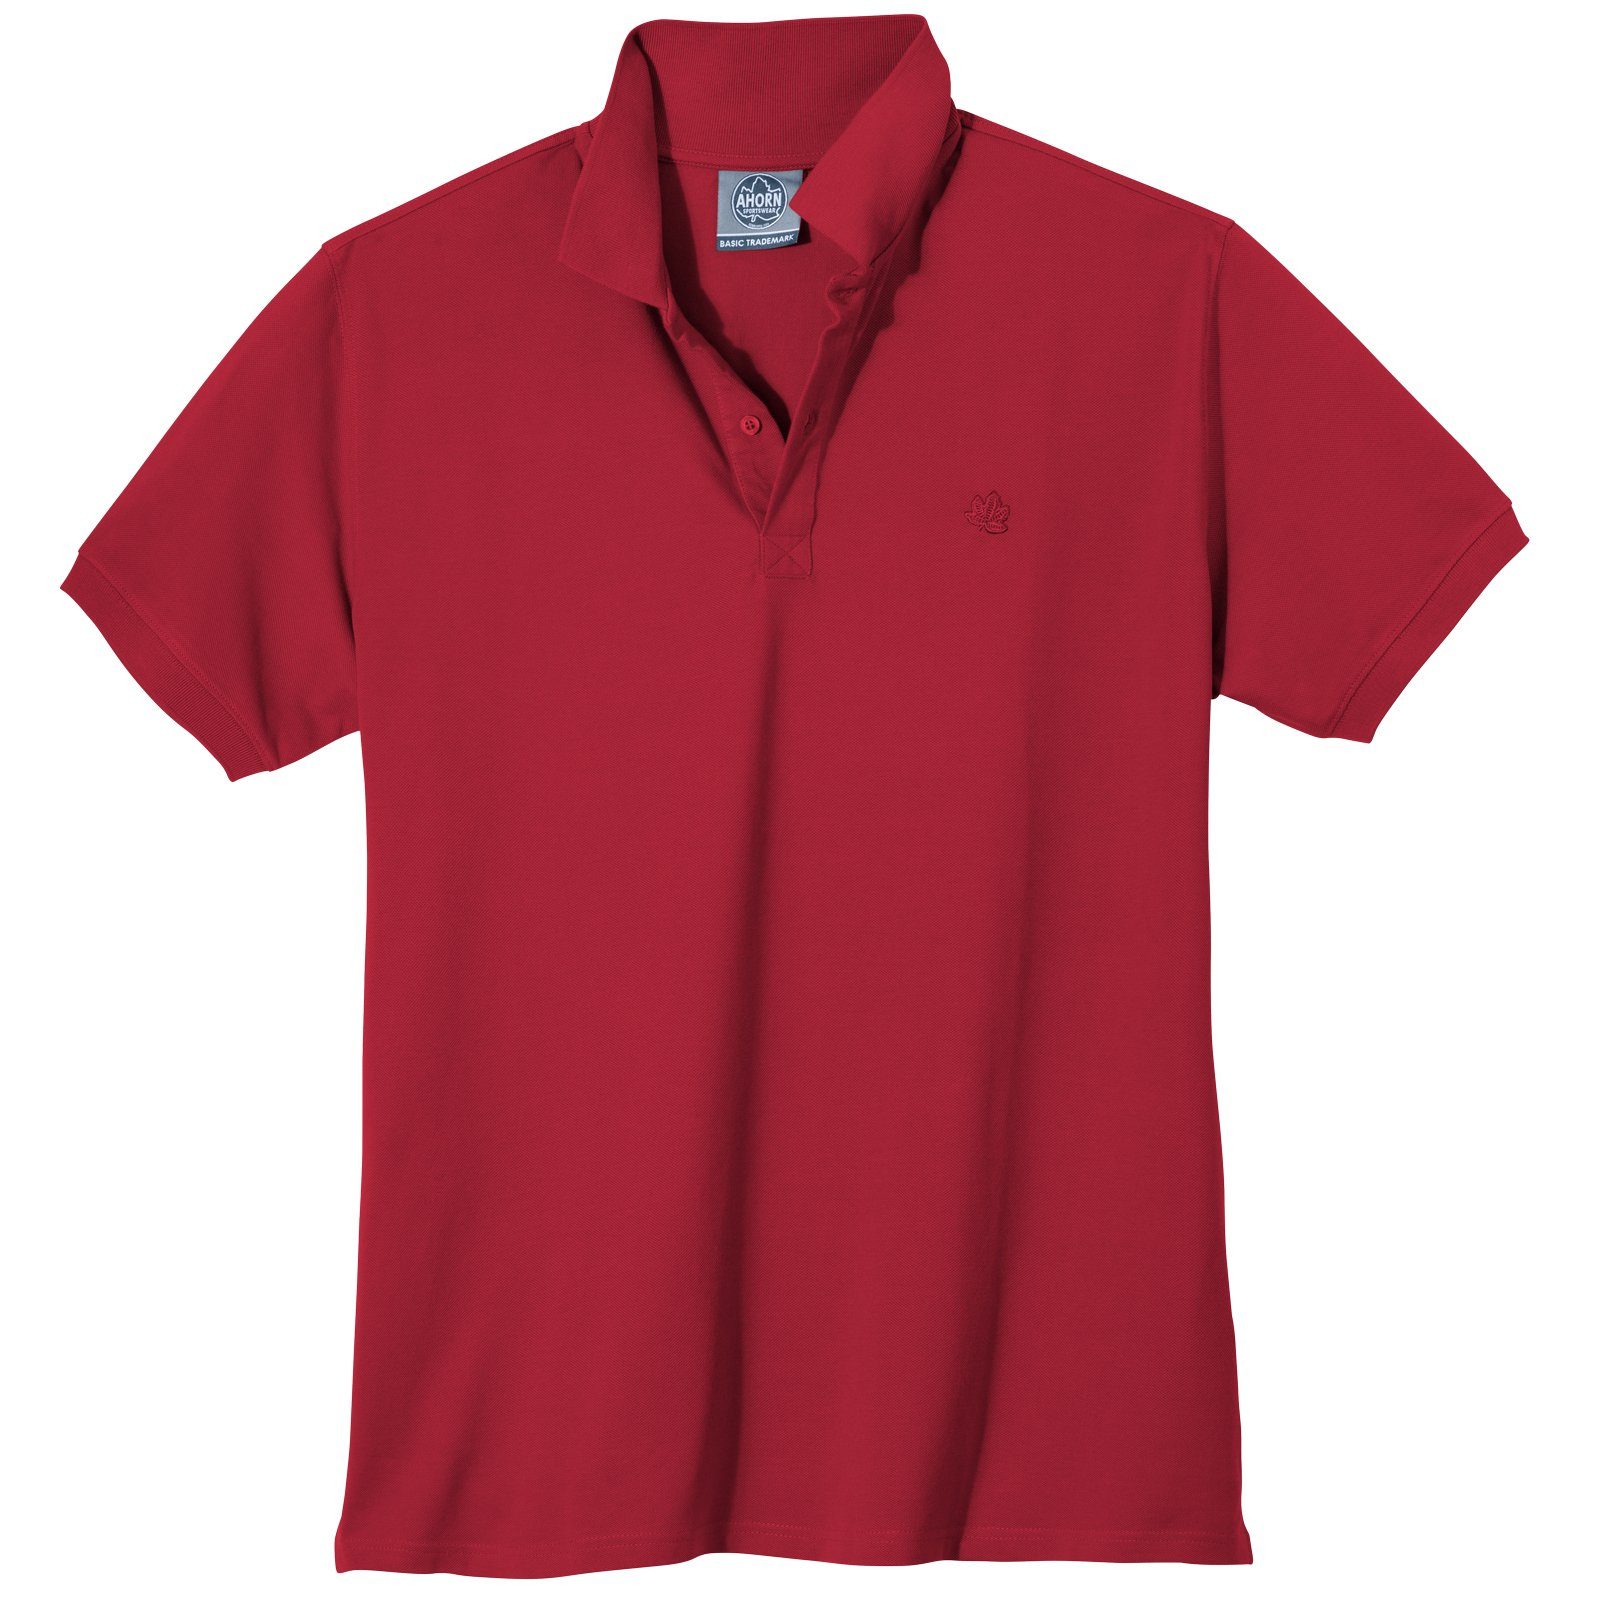 AHORN SPORTSWEAR Poloshirt Herren Übergrößen rot Sportswear Poloshirt Ahorn